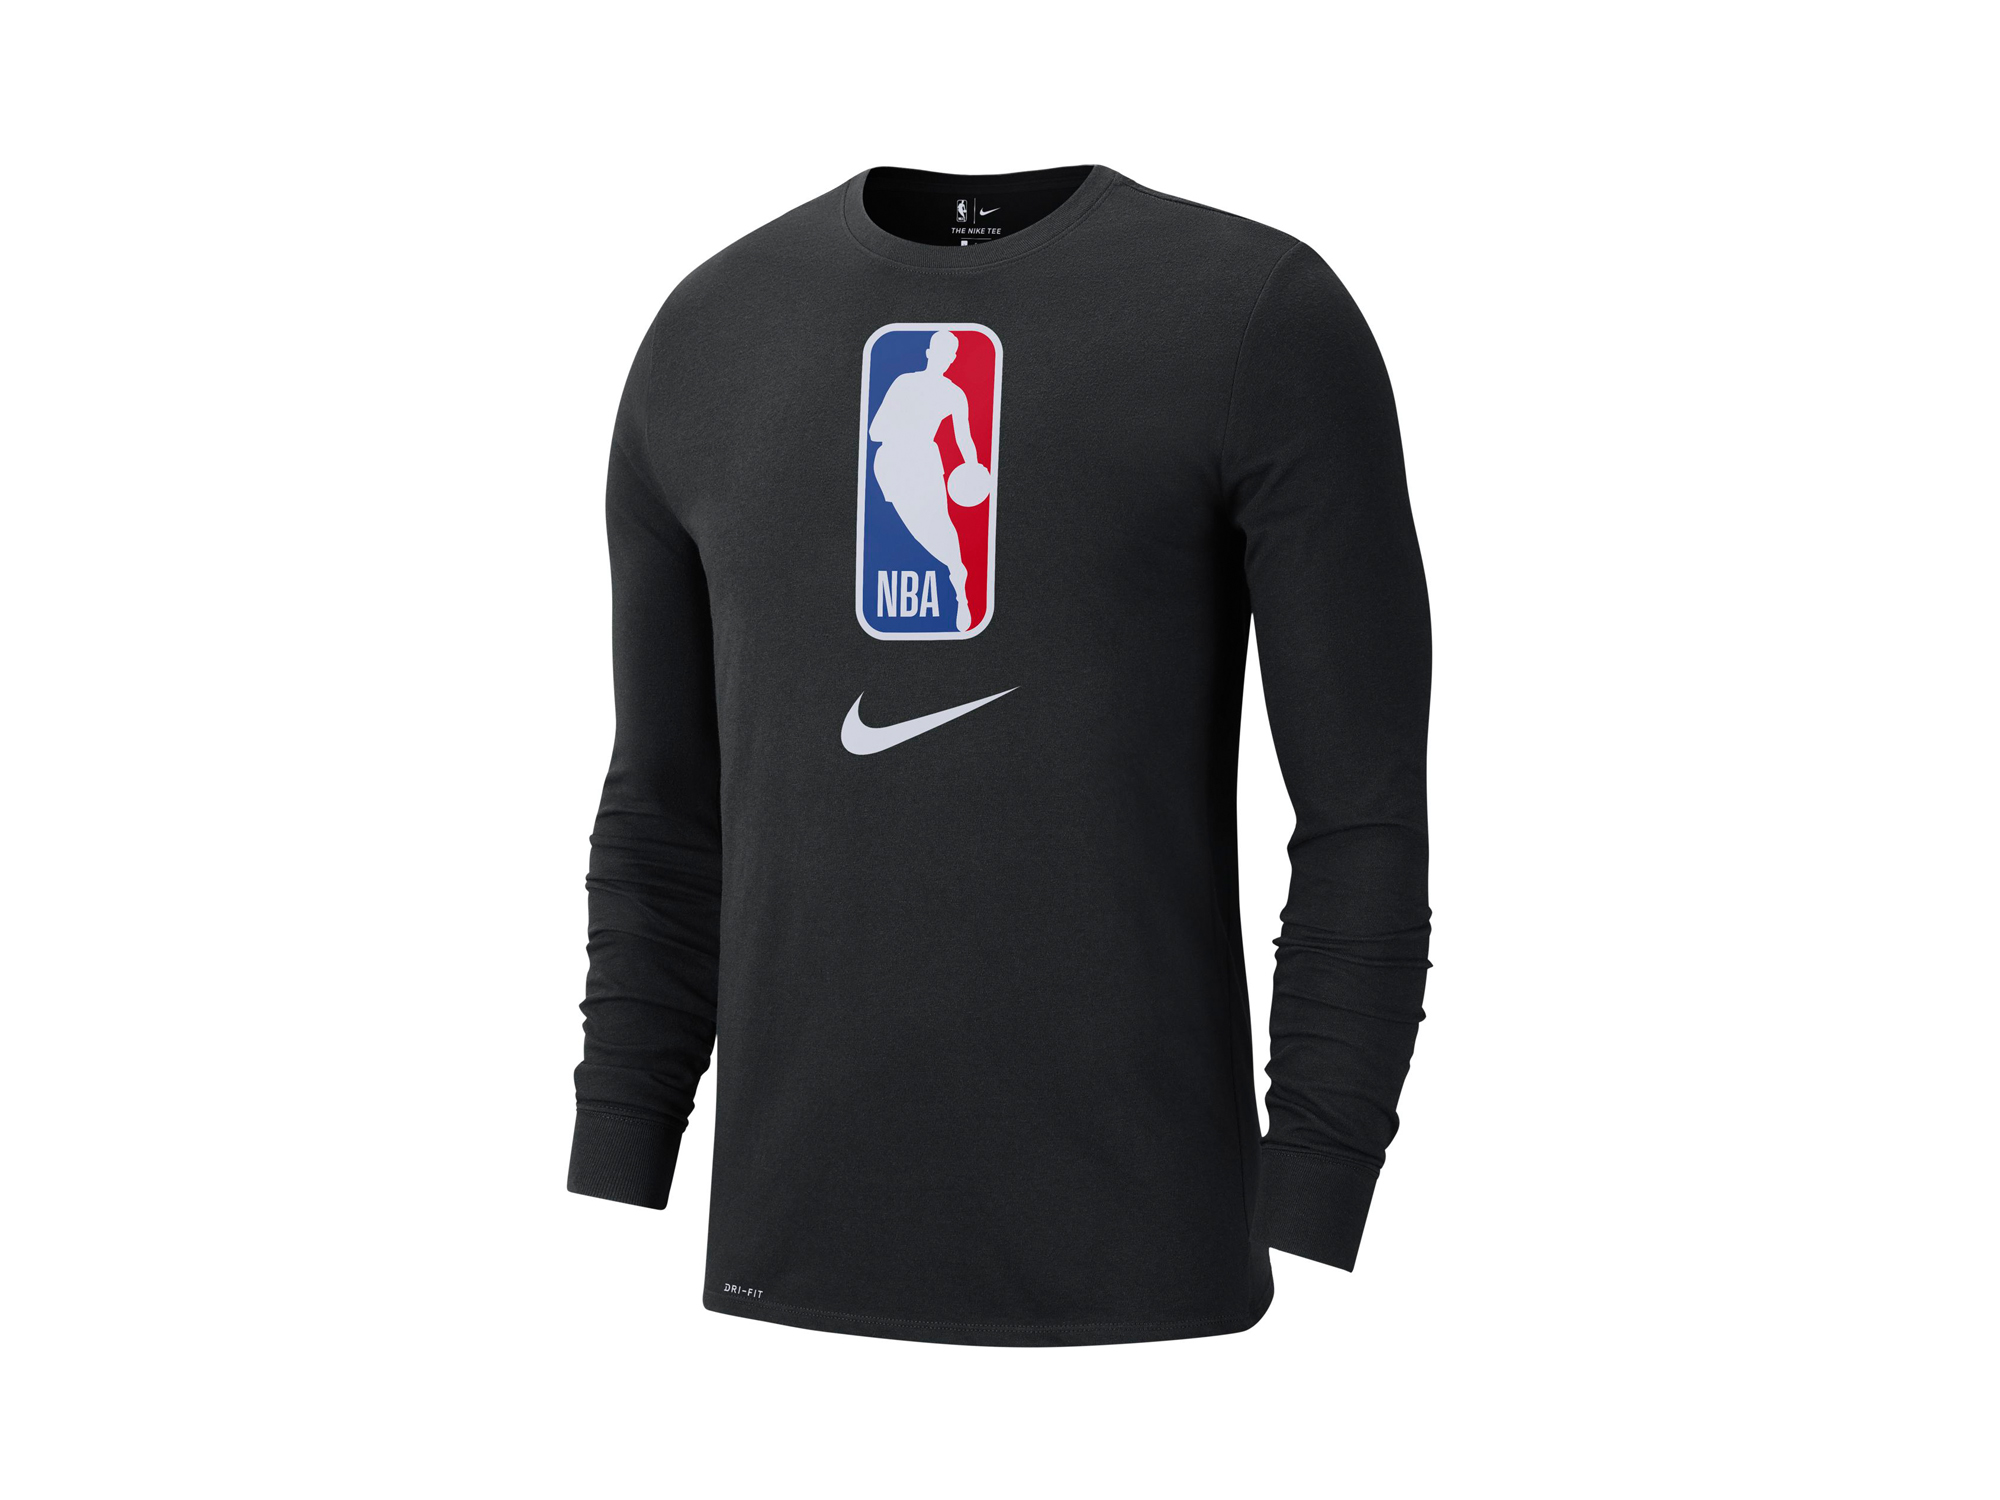 Nike NBA Team 31 Longsleeve Shirt